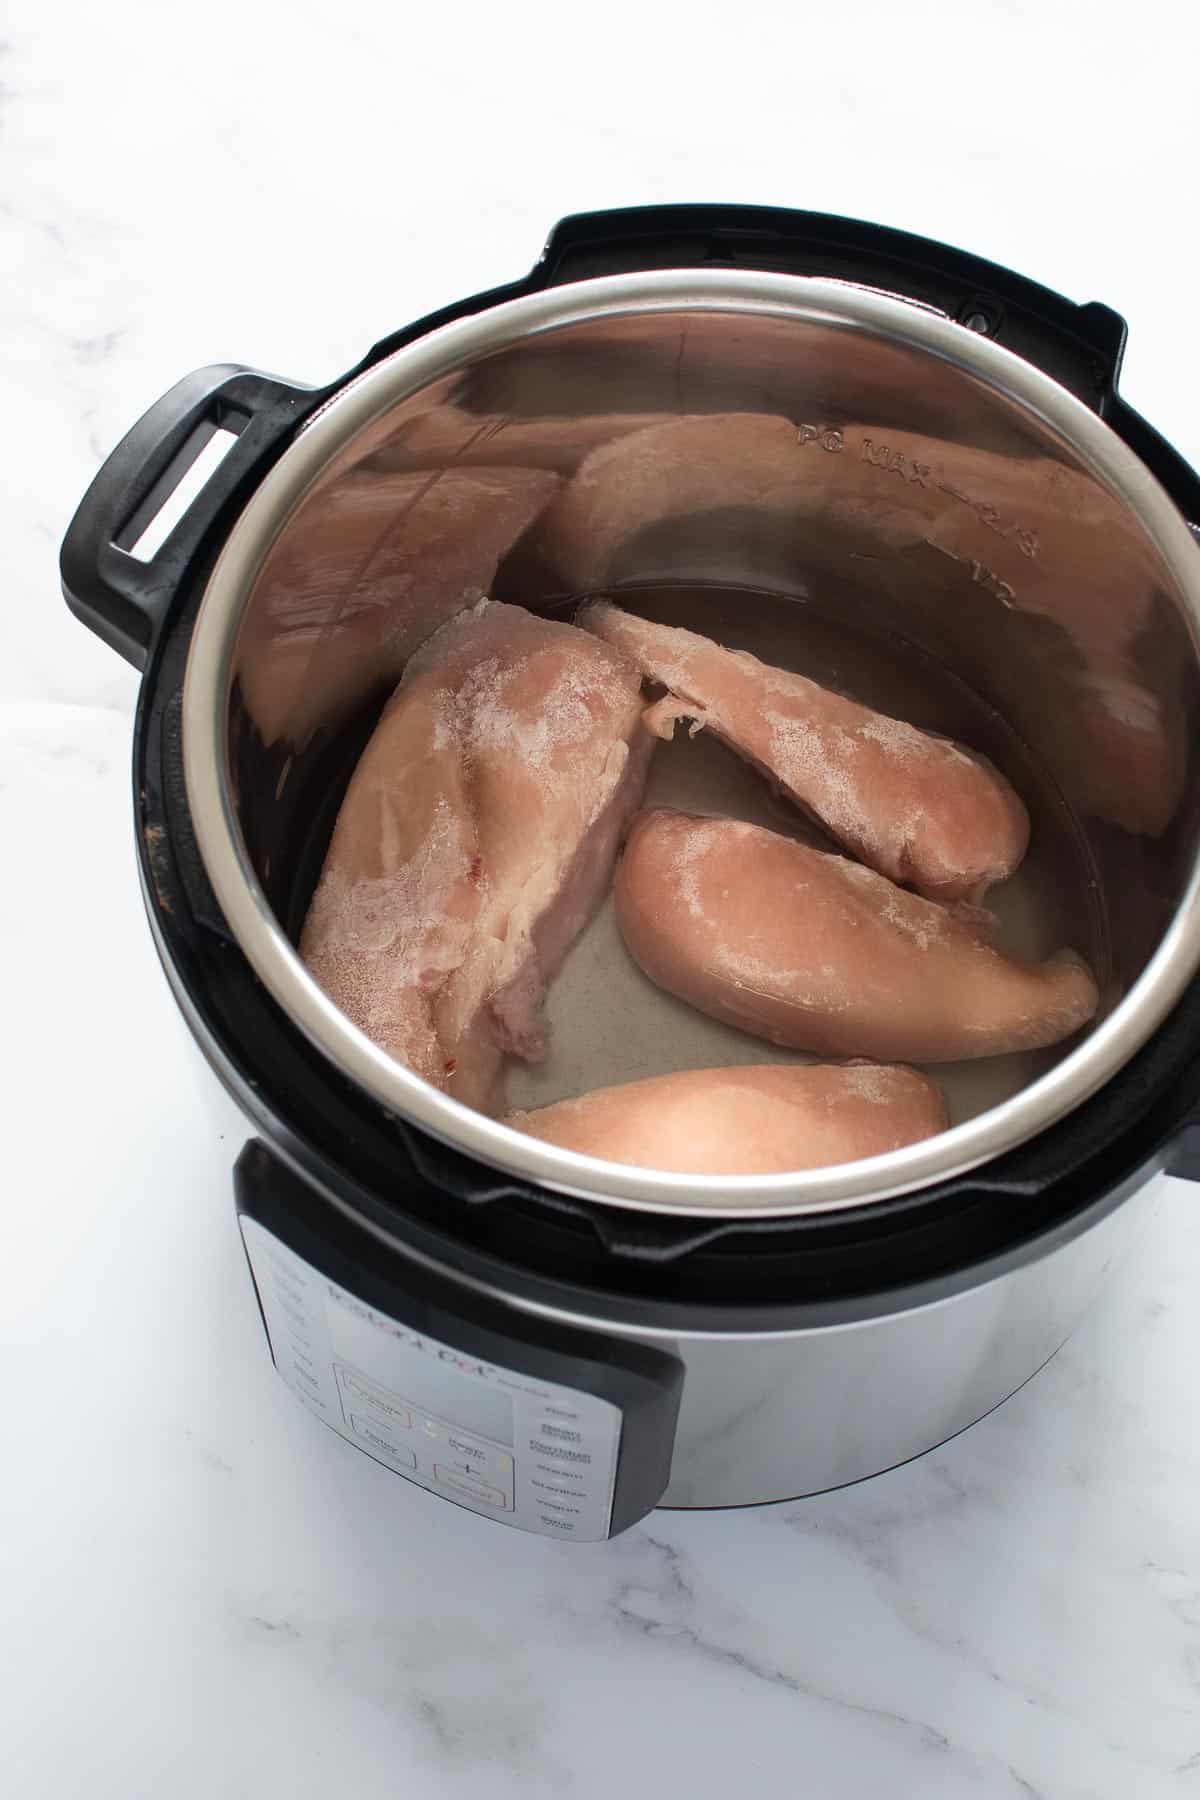 Frozen chicken breast in an instant pot.